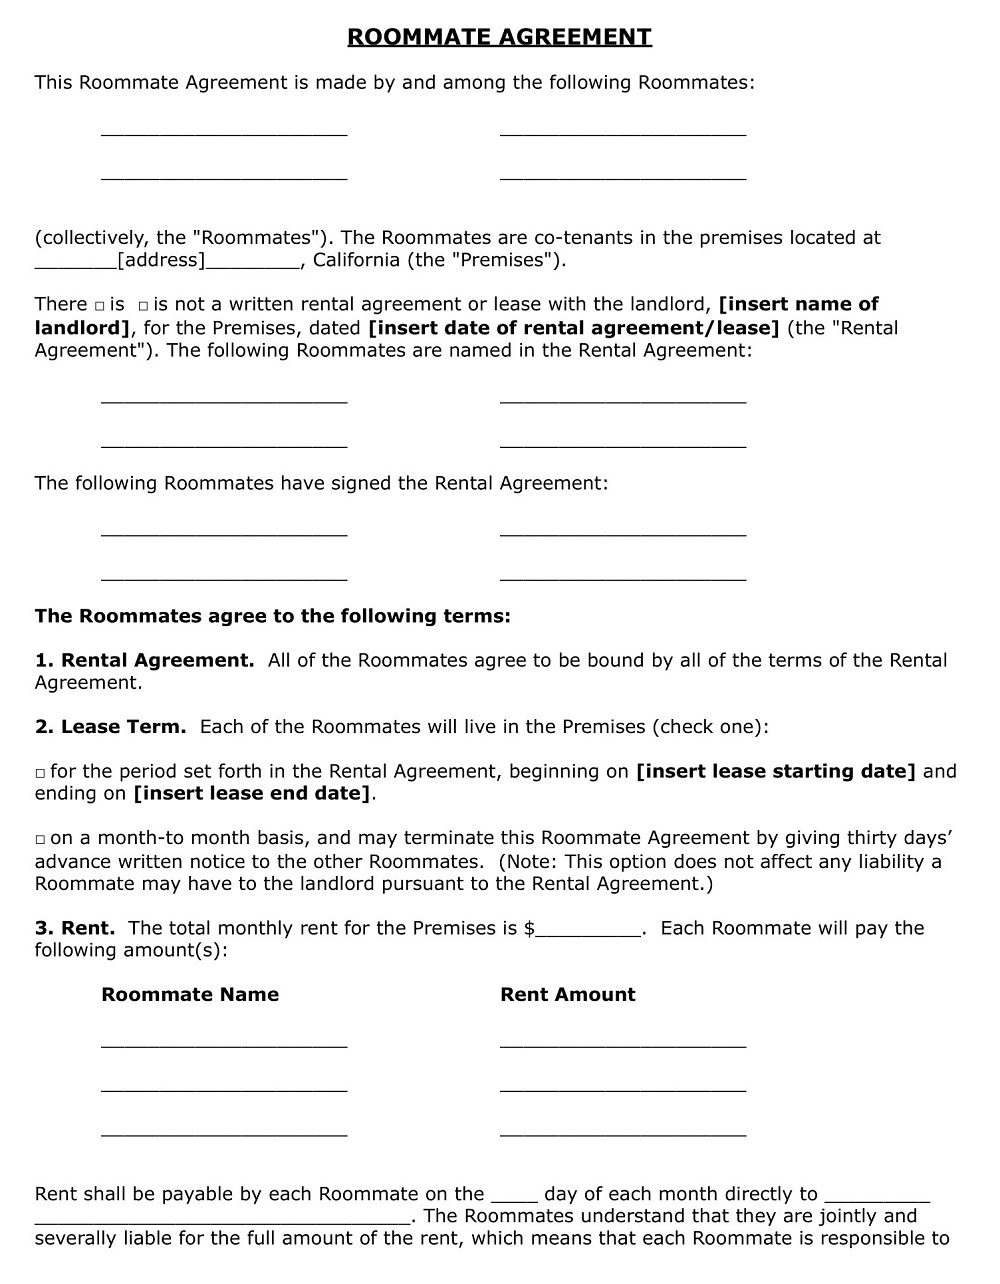 Roommate Agreement Format California